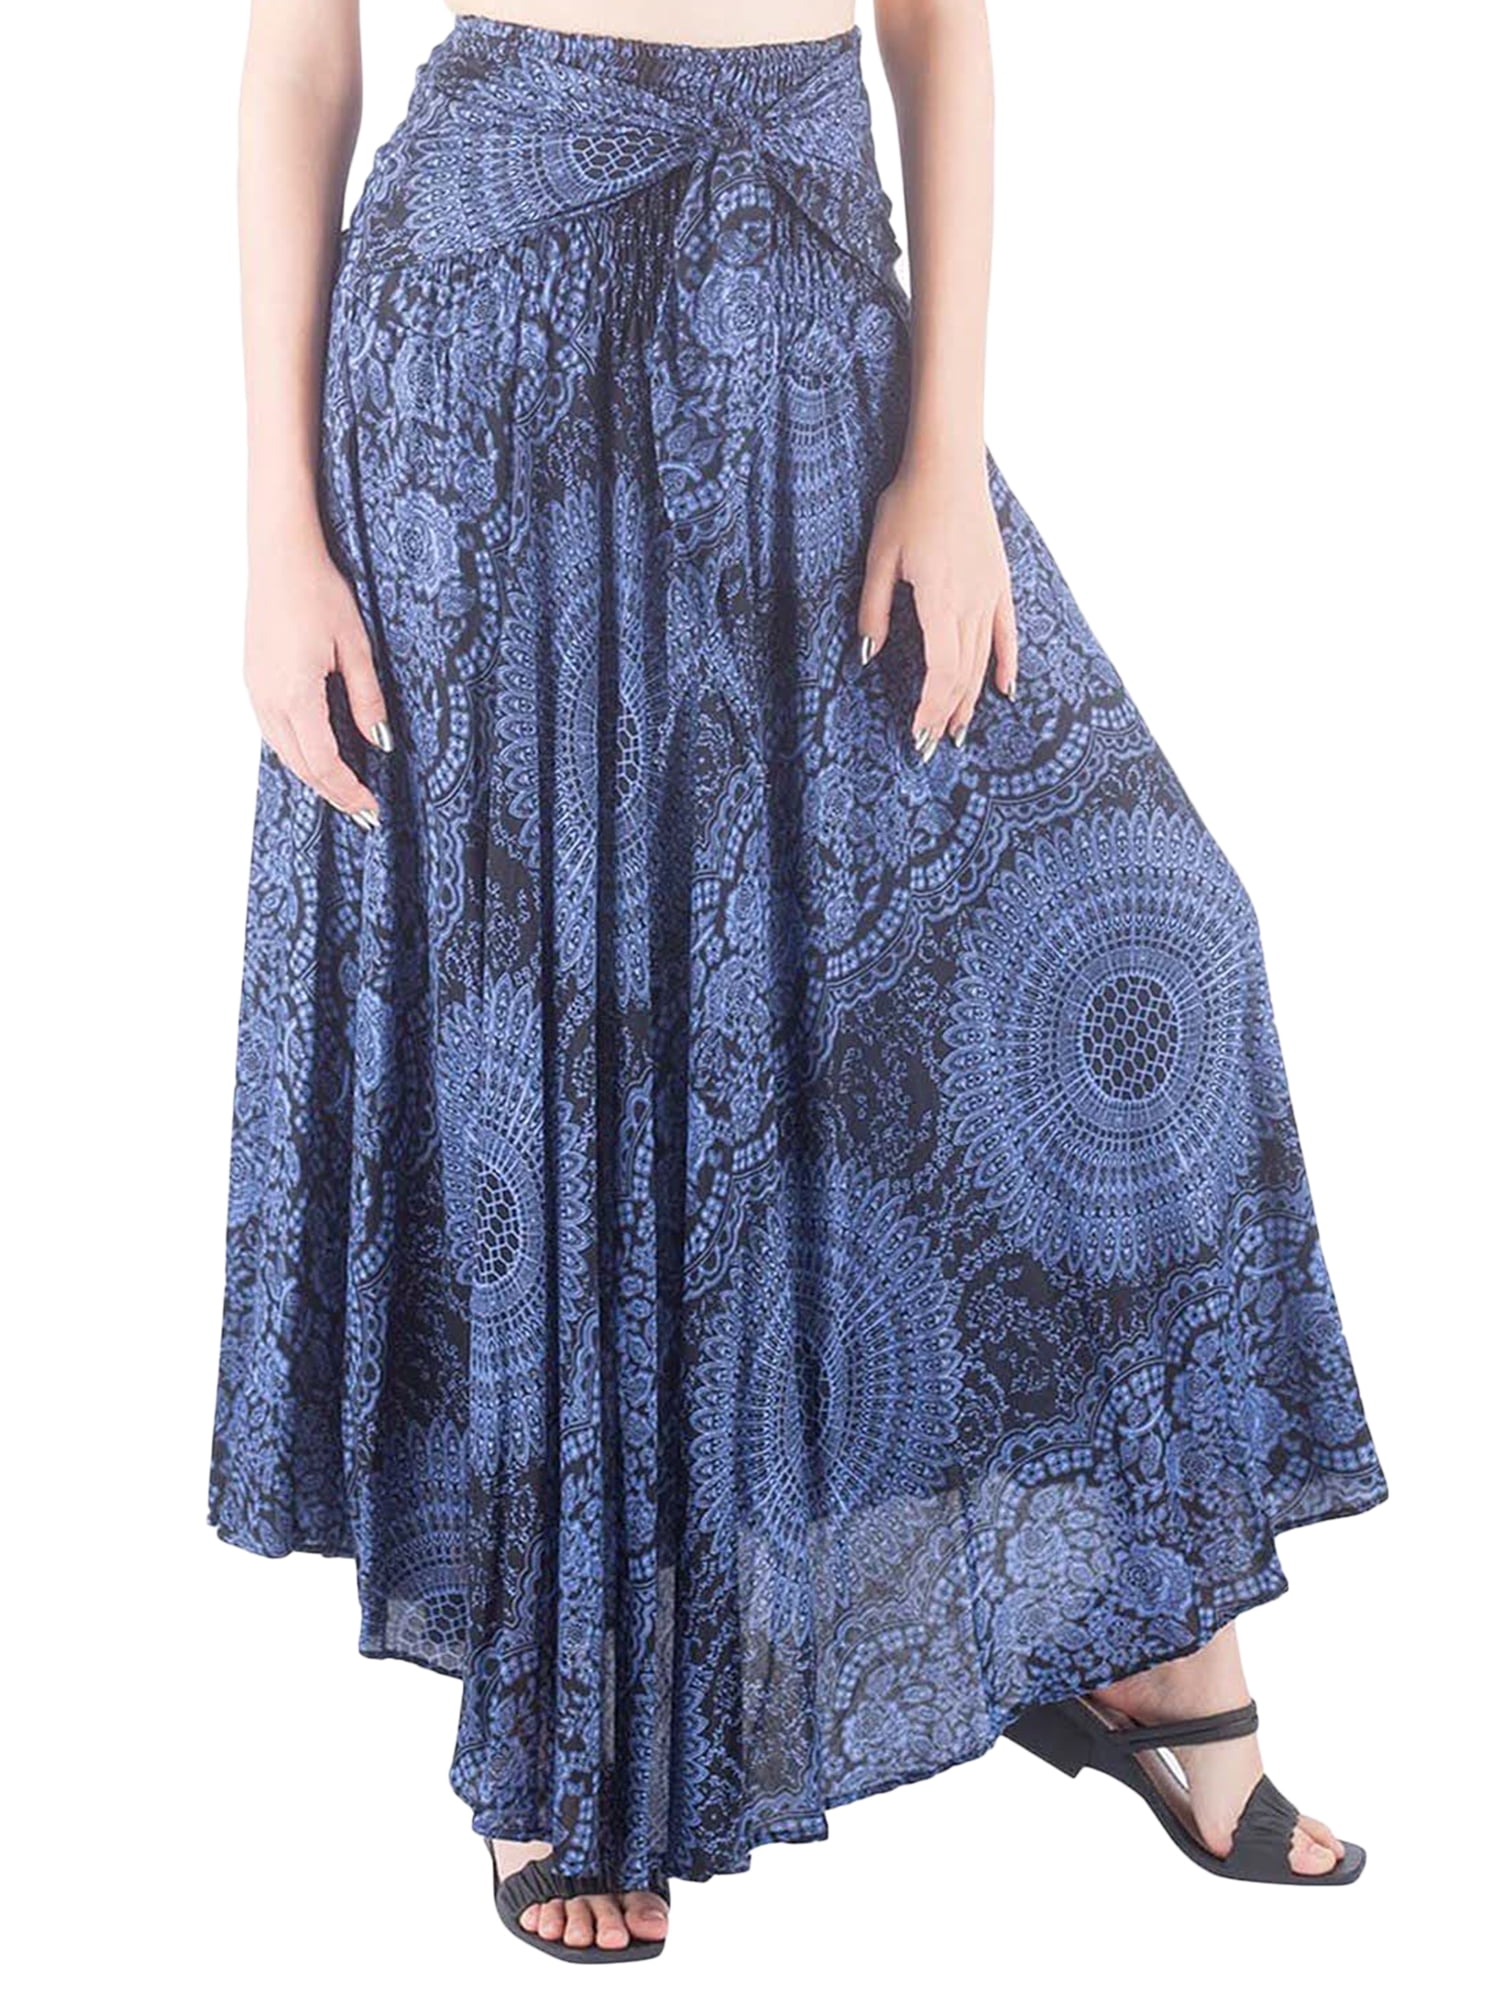 EXCHIC Women's Bohemian Style Print/Solid Elastic Waist Long Maxi Skirt 